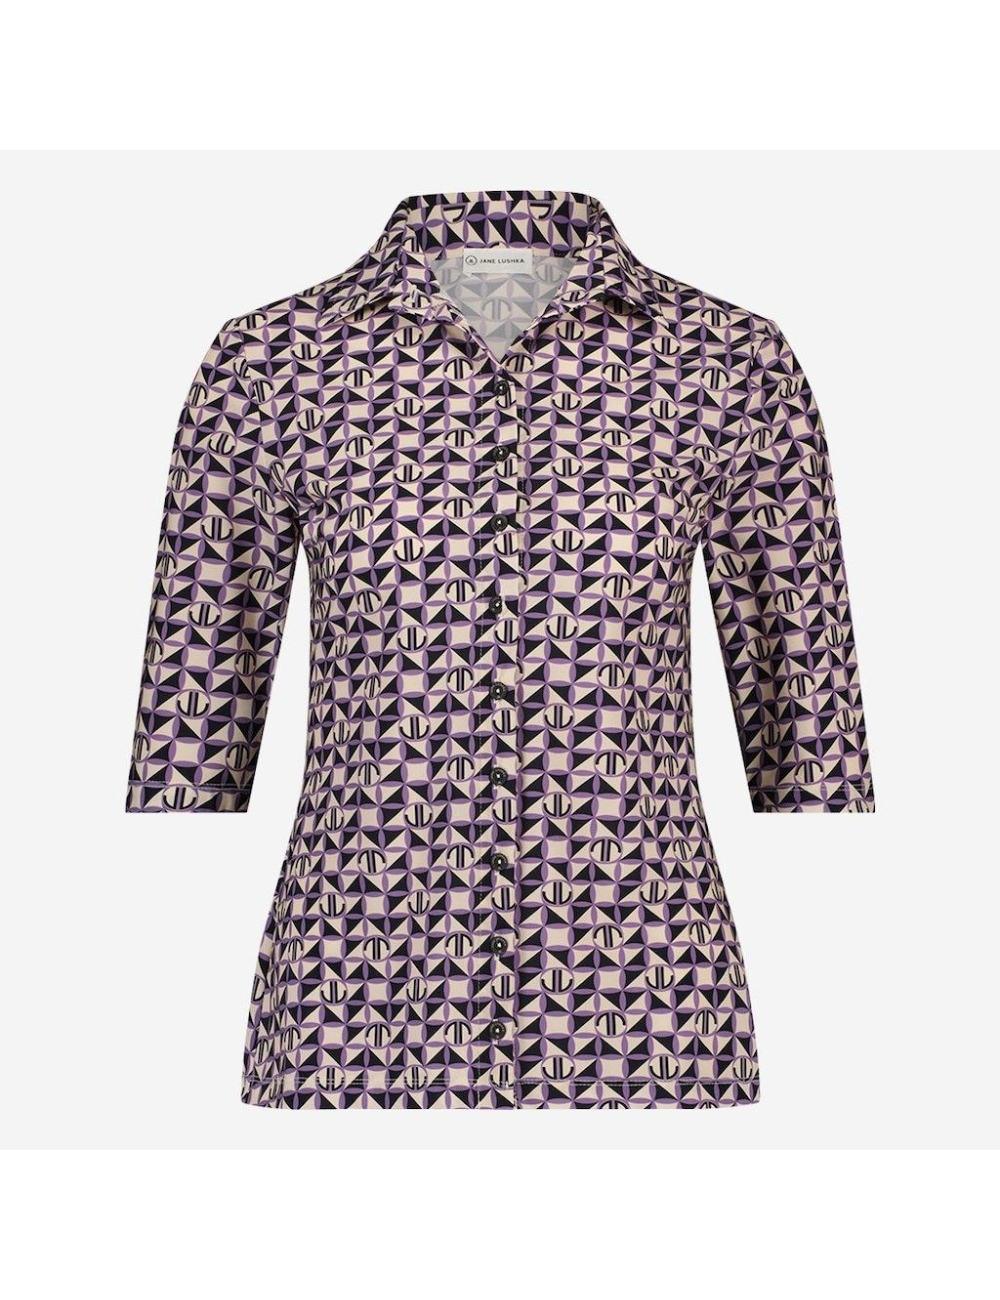 praktijk Intact Impasse Jane Lushka ulq723210 kikkie blouse technical jersey Blouse 007 light  purple | Expresswear.nl